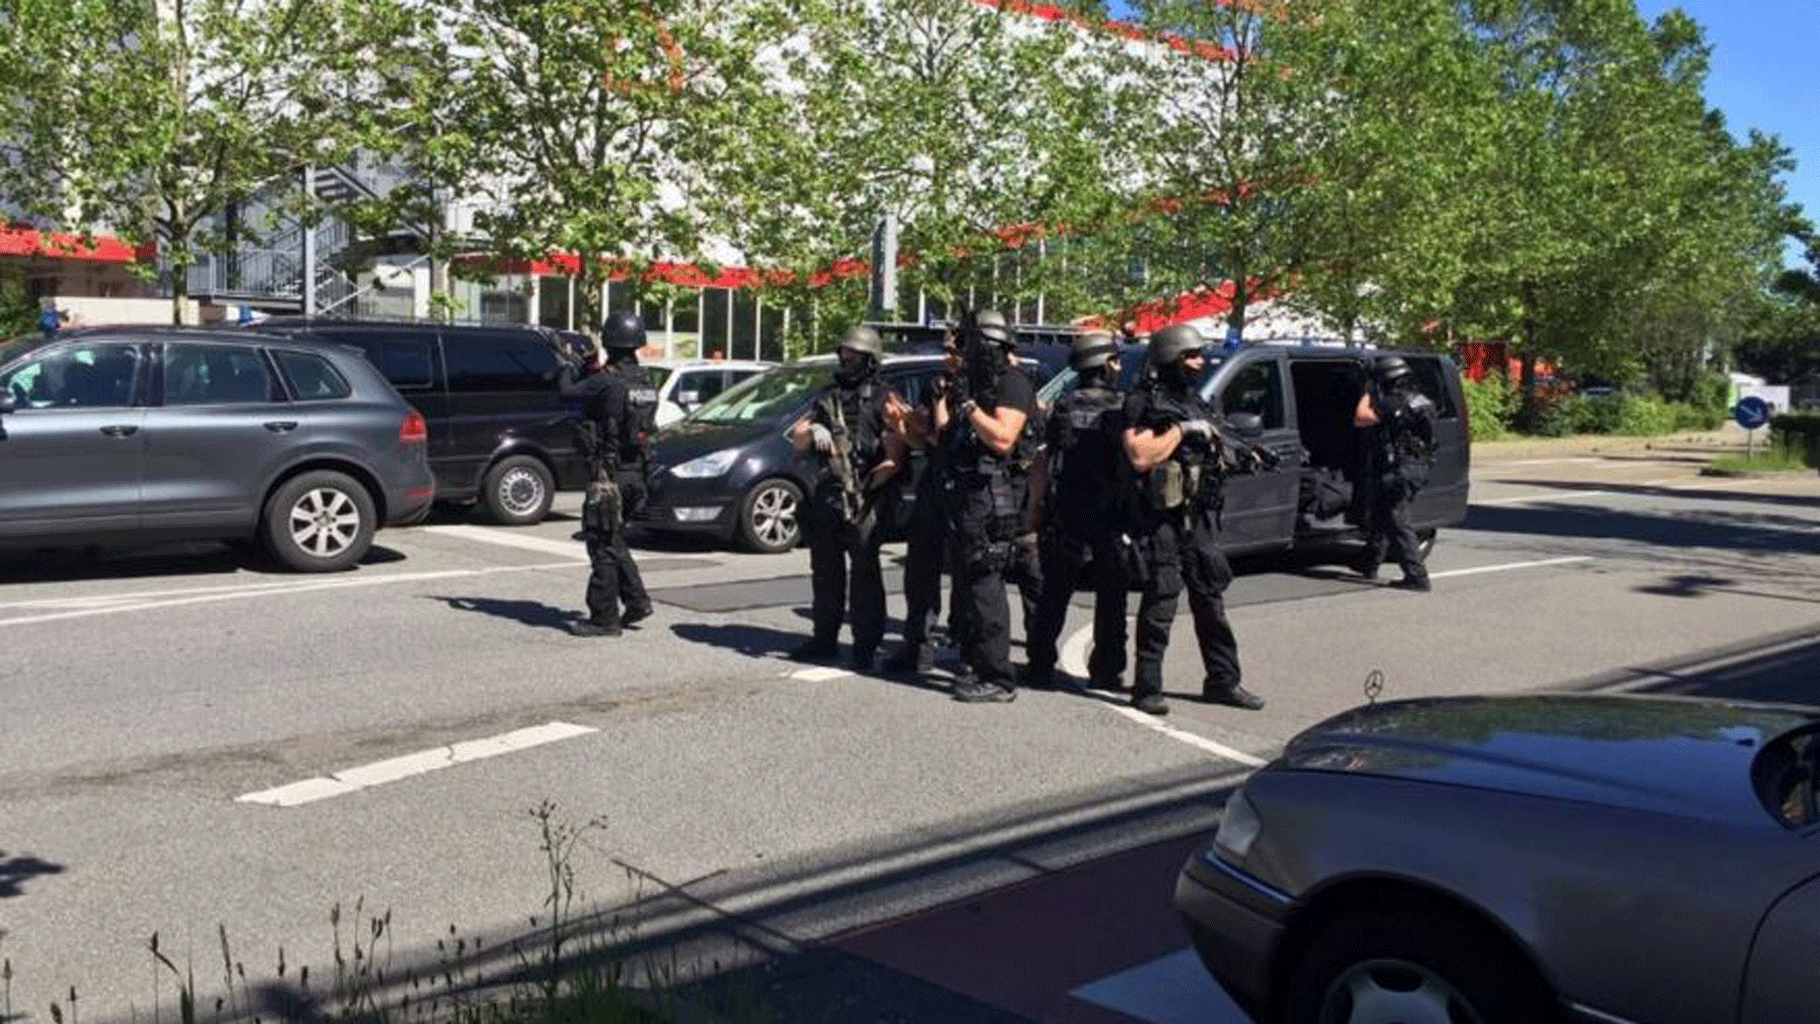 German police at Viernheim’s cinema complex. (Photo Courtesy: Twitter/<a href="https://twitter.com/SputnikInt/status/745993619811733504">@SputnikInt</a>)